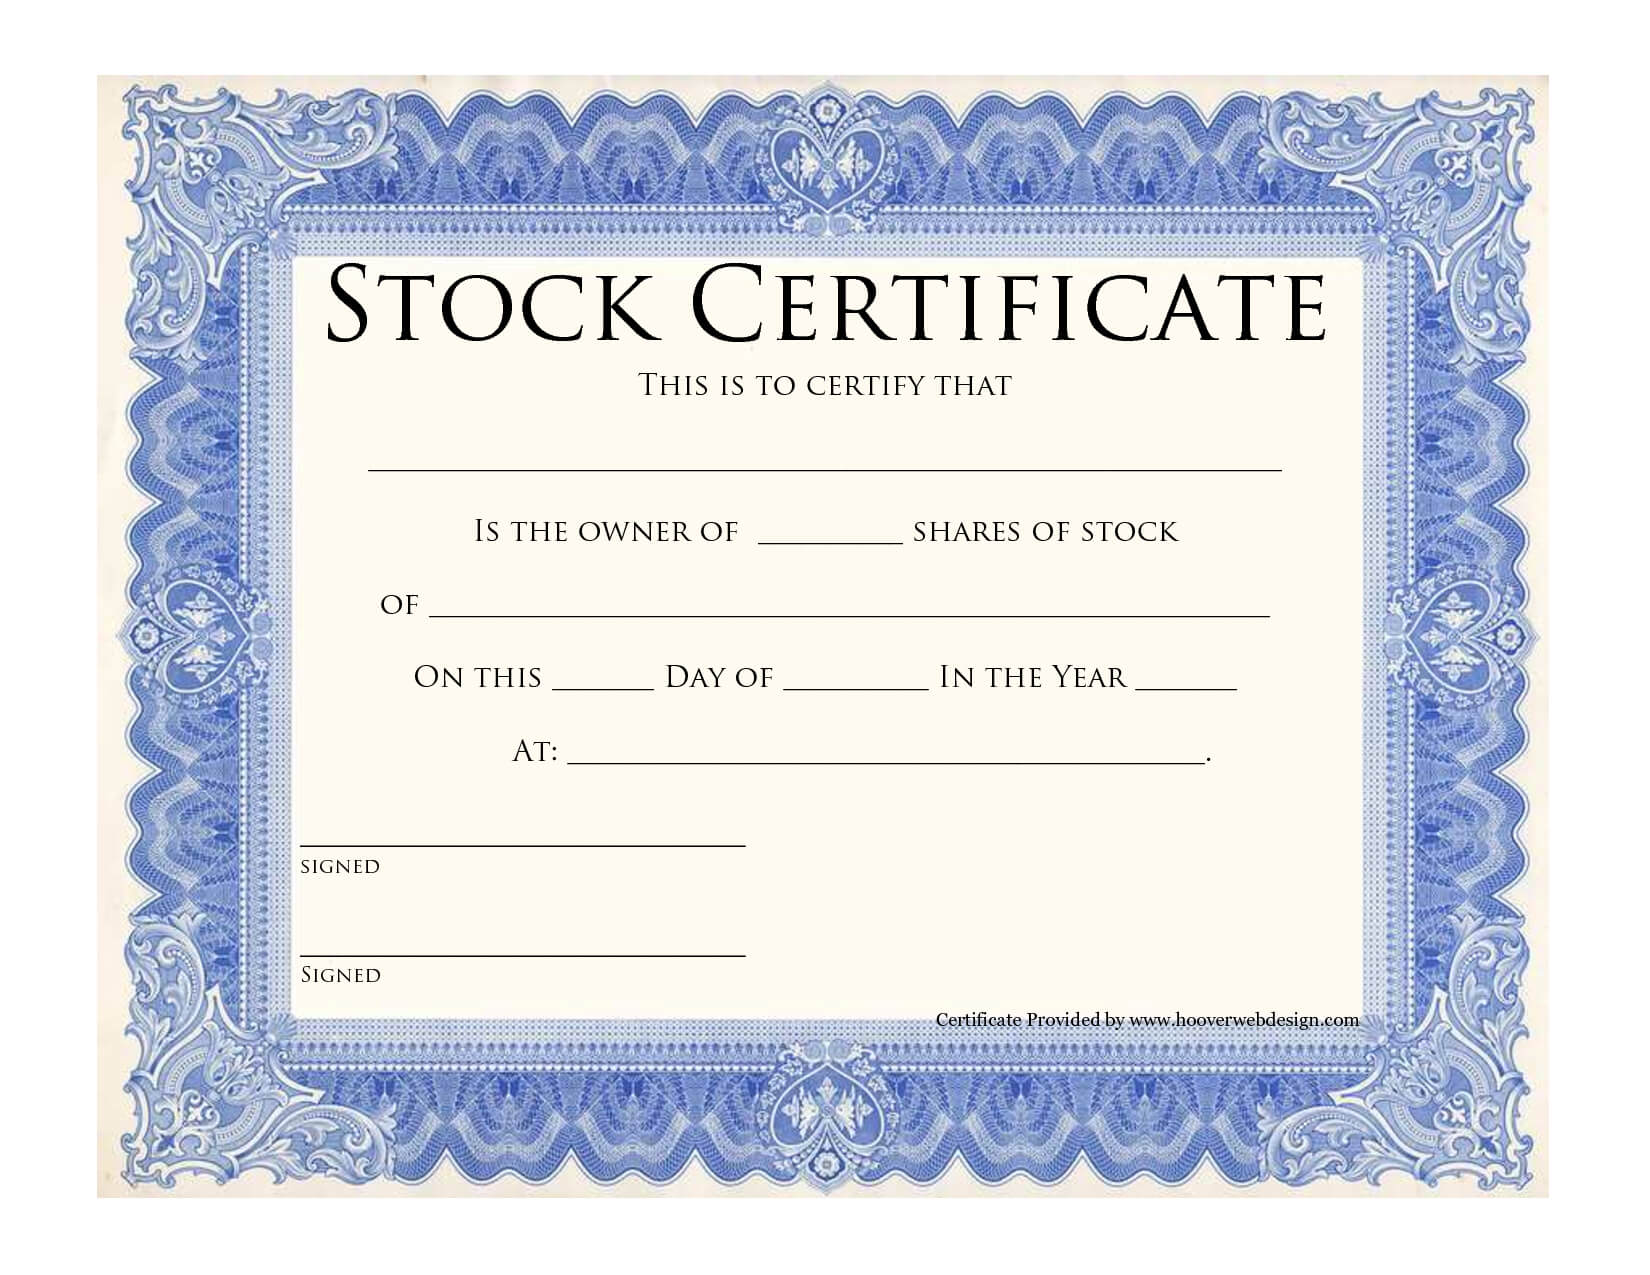 Blank Stock Certificate Template | Printable Stock Within Stock Certificate Template Word